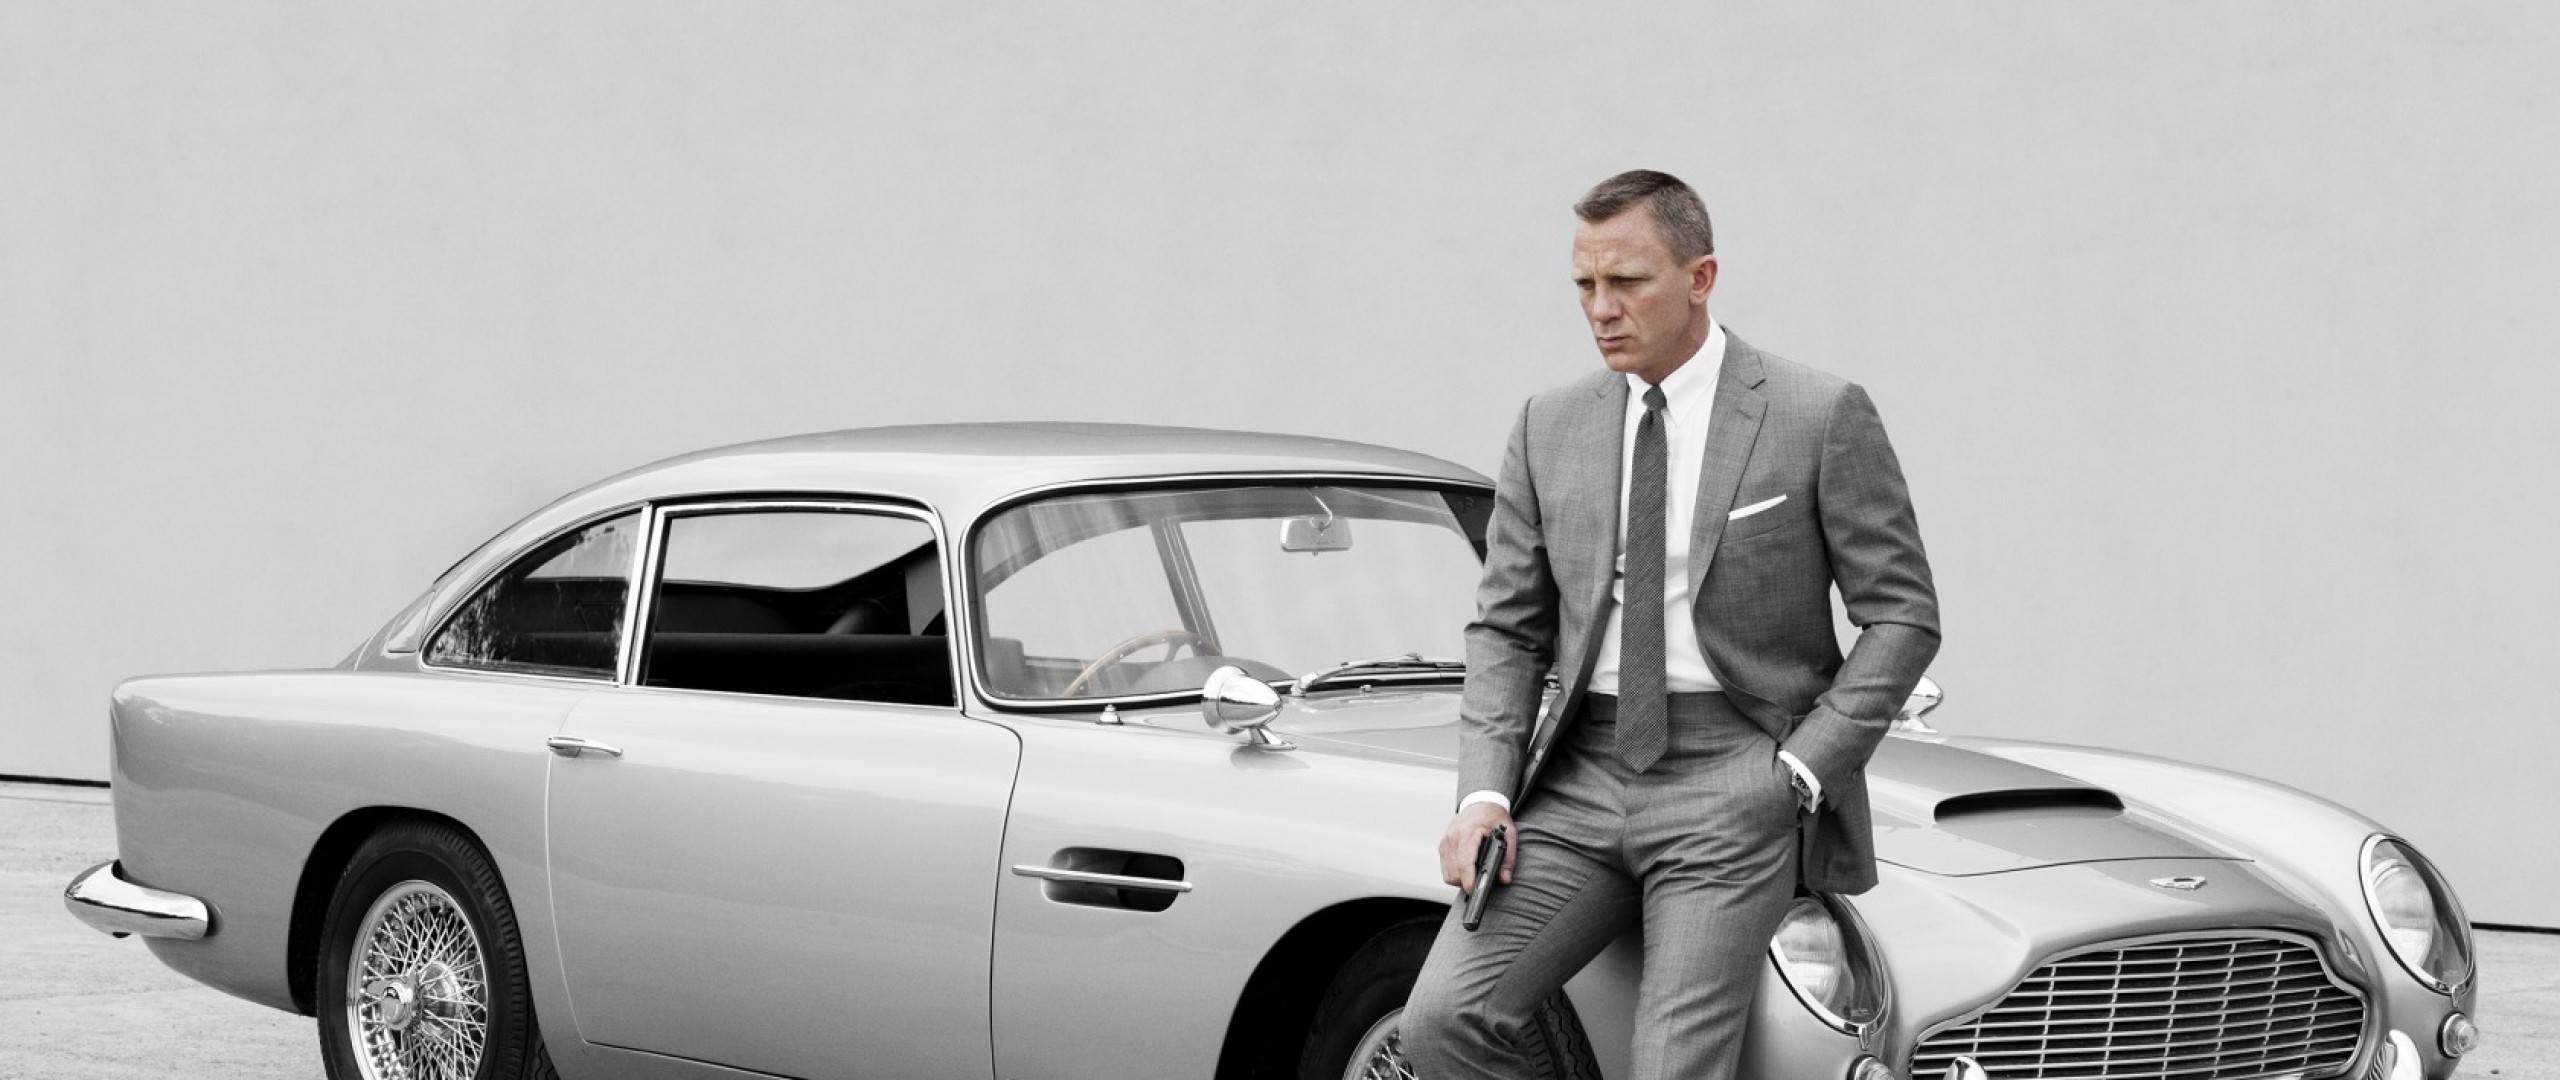 1366x768 Daniel Craig as James Bond desktop PC and Mac wallpaper  James  bond Daniel craig James bond skyfall